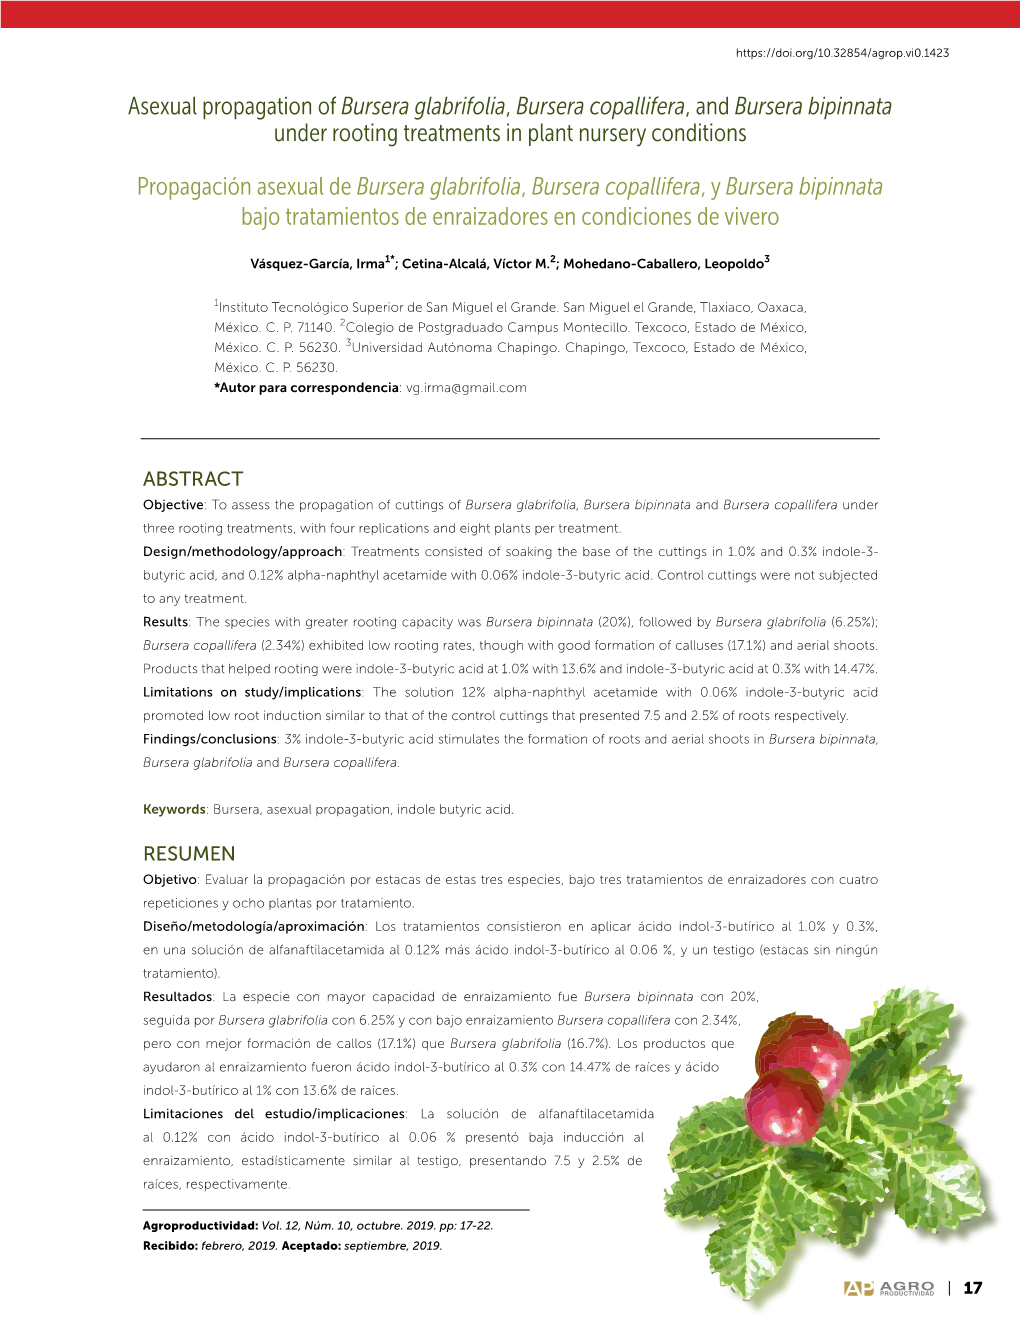 Bursera Copallifera, and Bursera Bipinnata Under Rooting Treatments in Plant Nursery Conditions